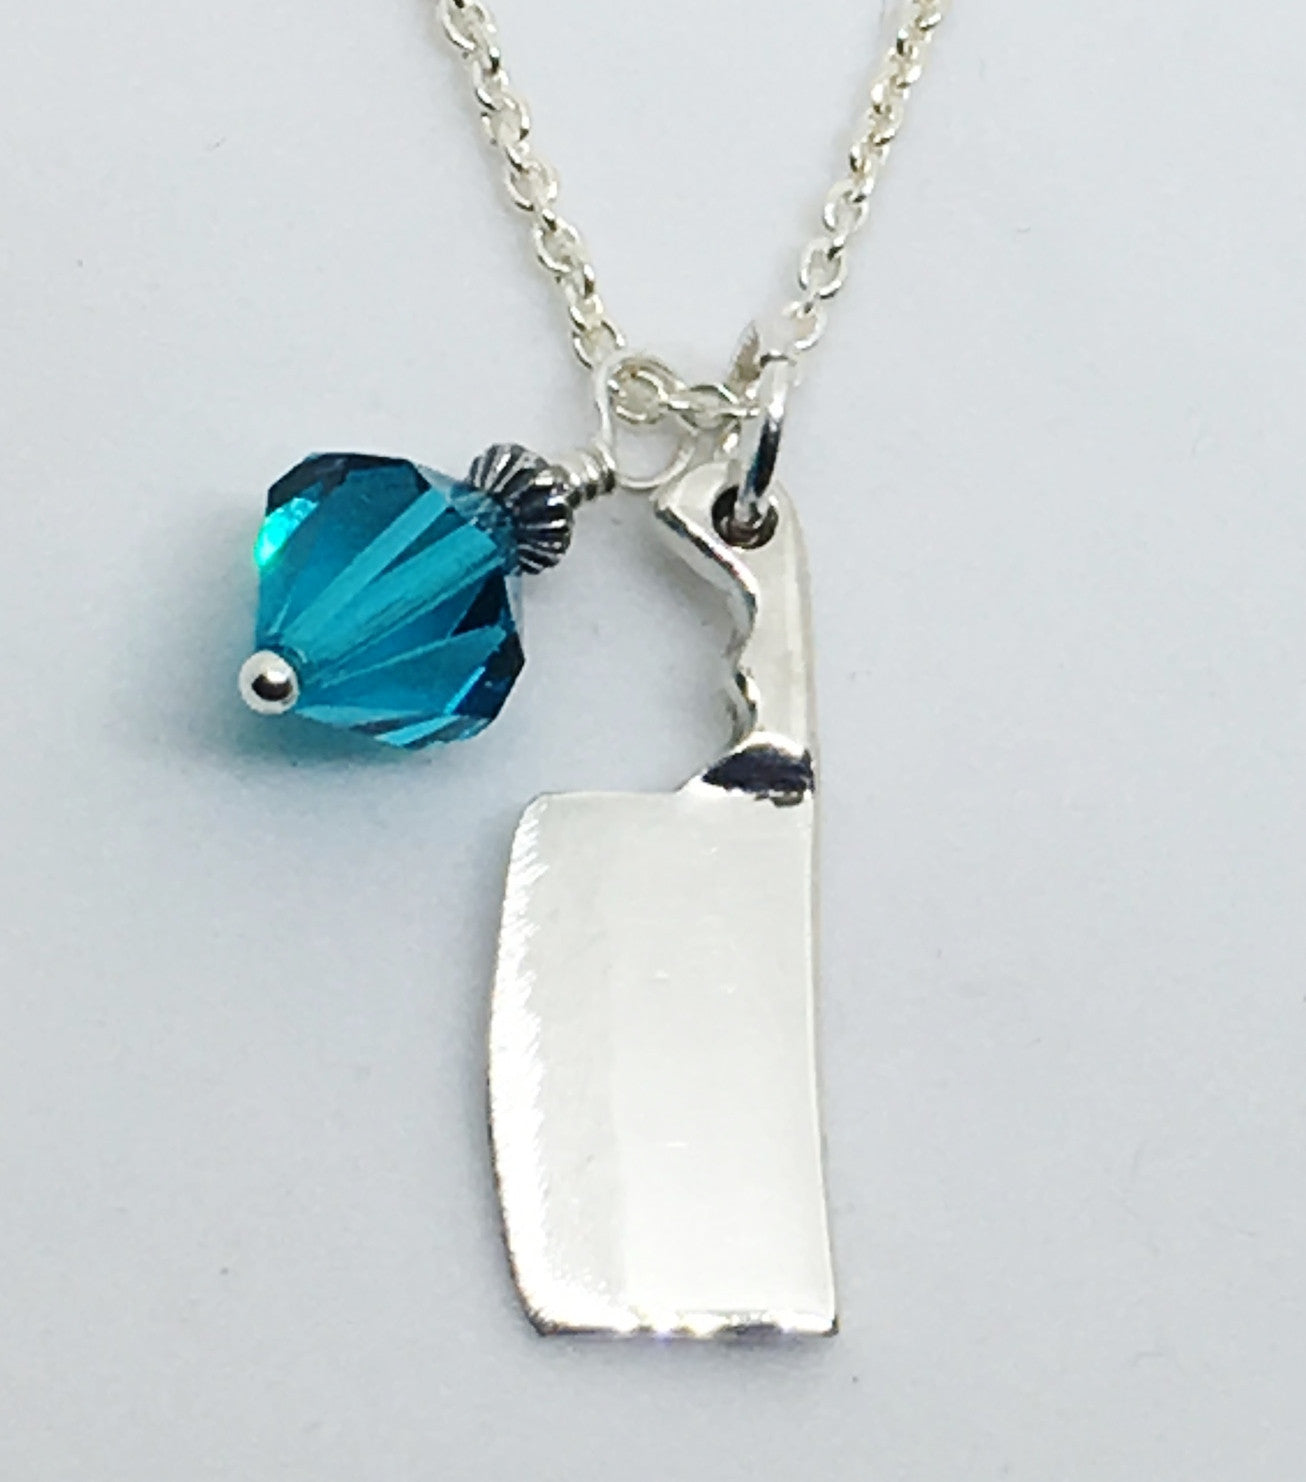 Chef's Cleaver Knife Pendant Necklace with Aqua Blue Swarovski Crystal Charm